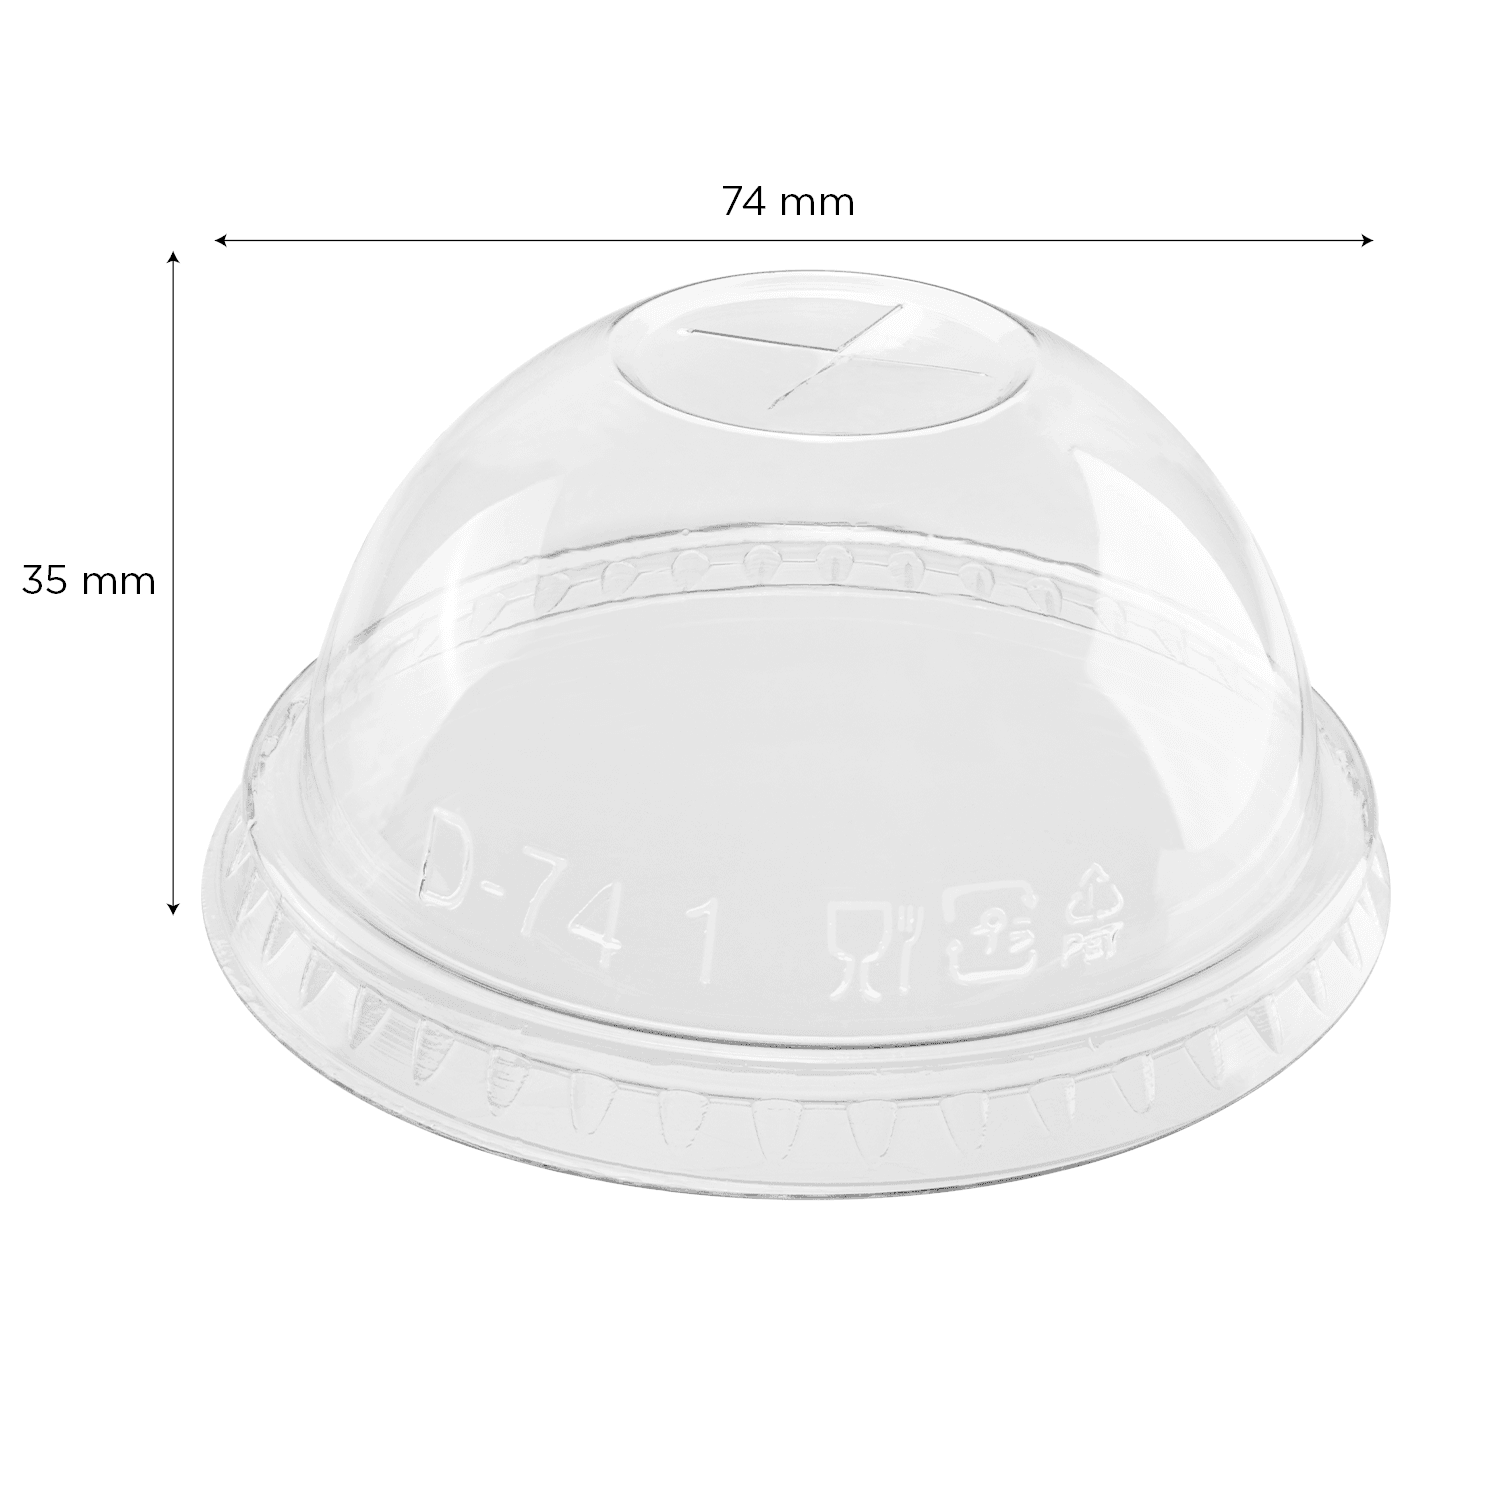 Karat PET Clear Dome Lid for 7oz PET Cup with measurements